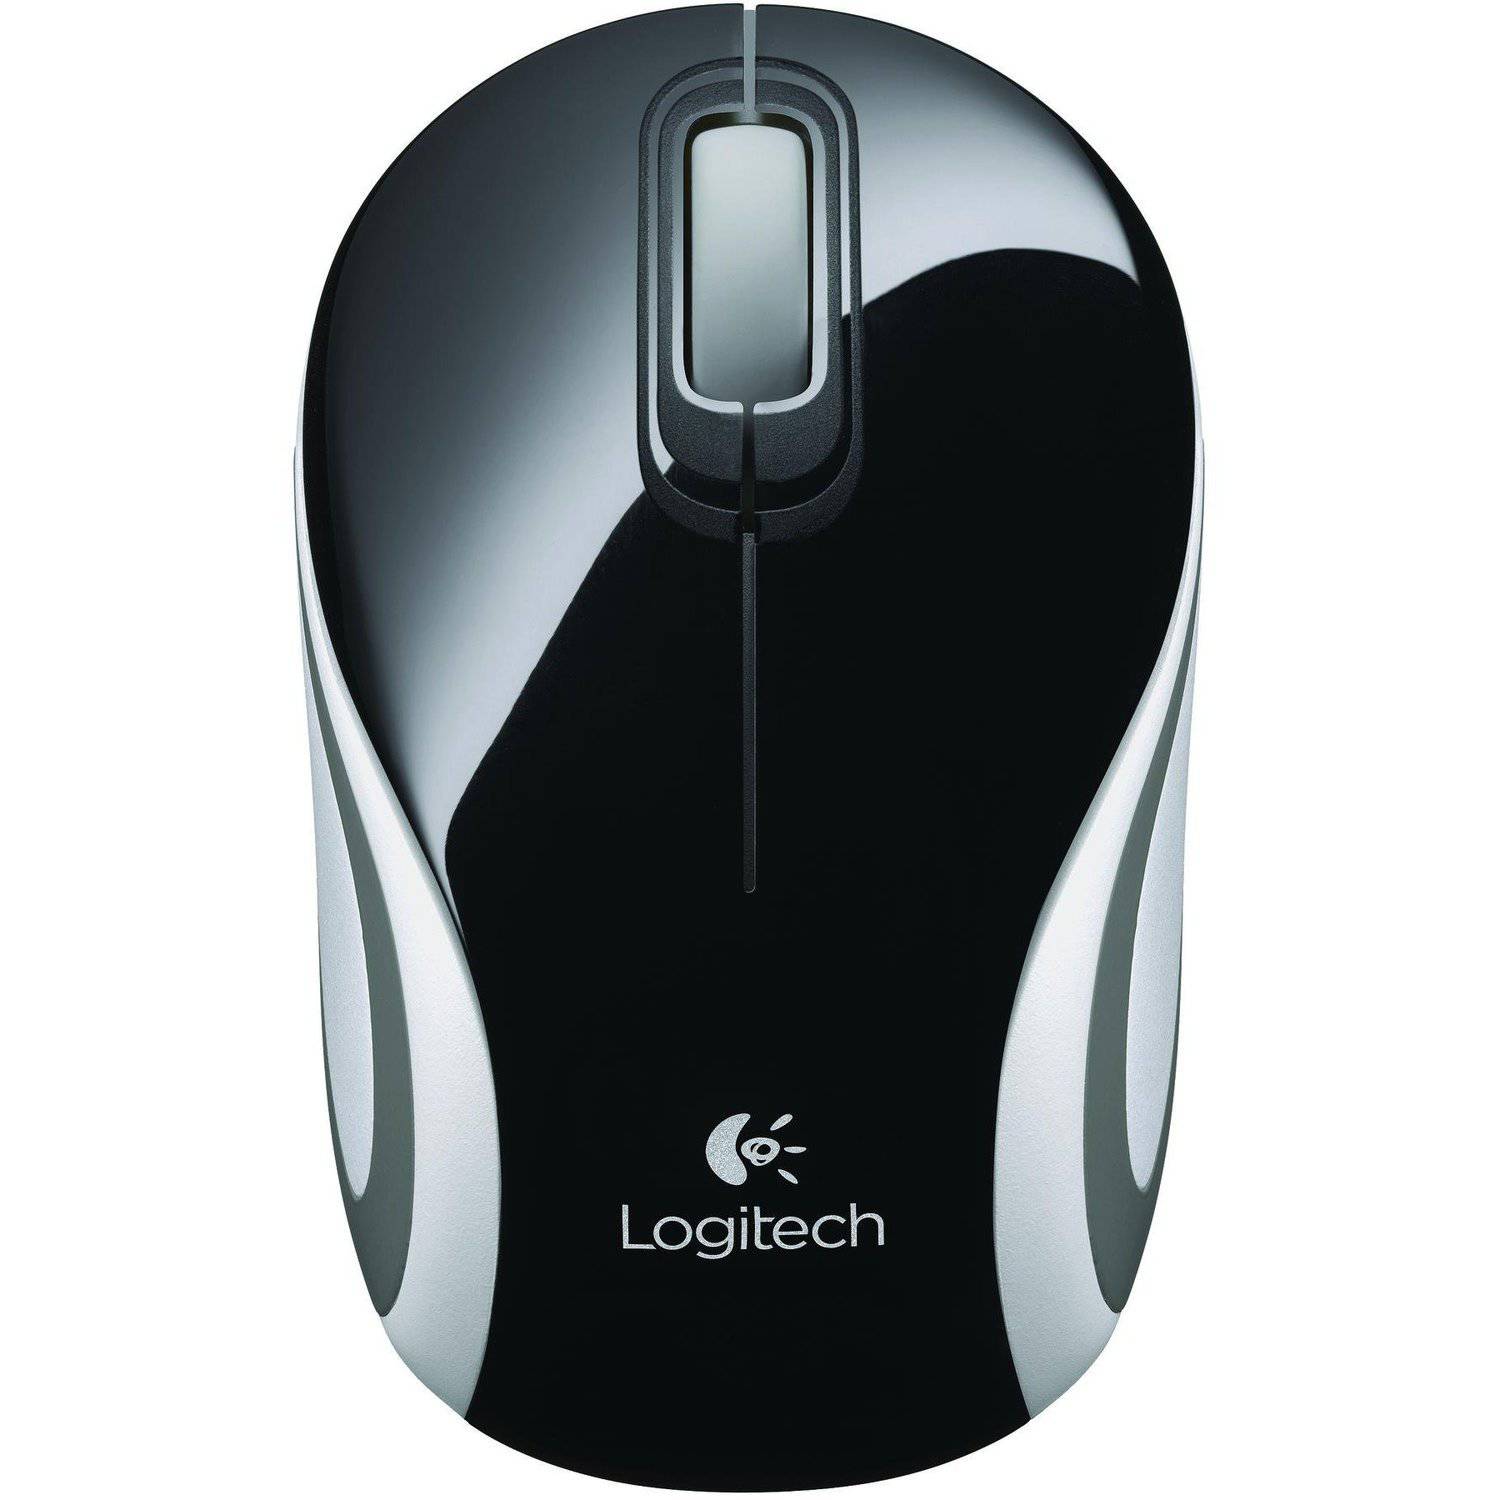 Logitech M187 Wireless Mini Mouse, Black - image 1 of 3